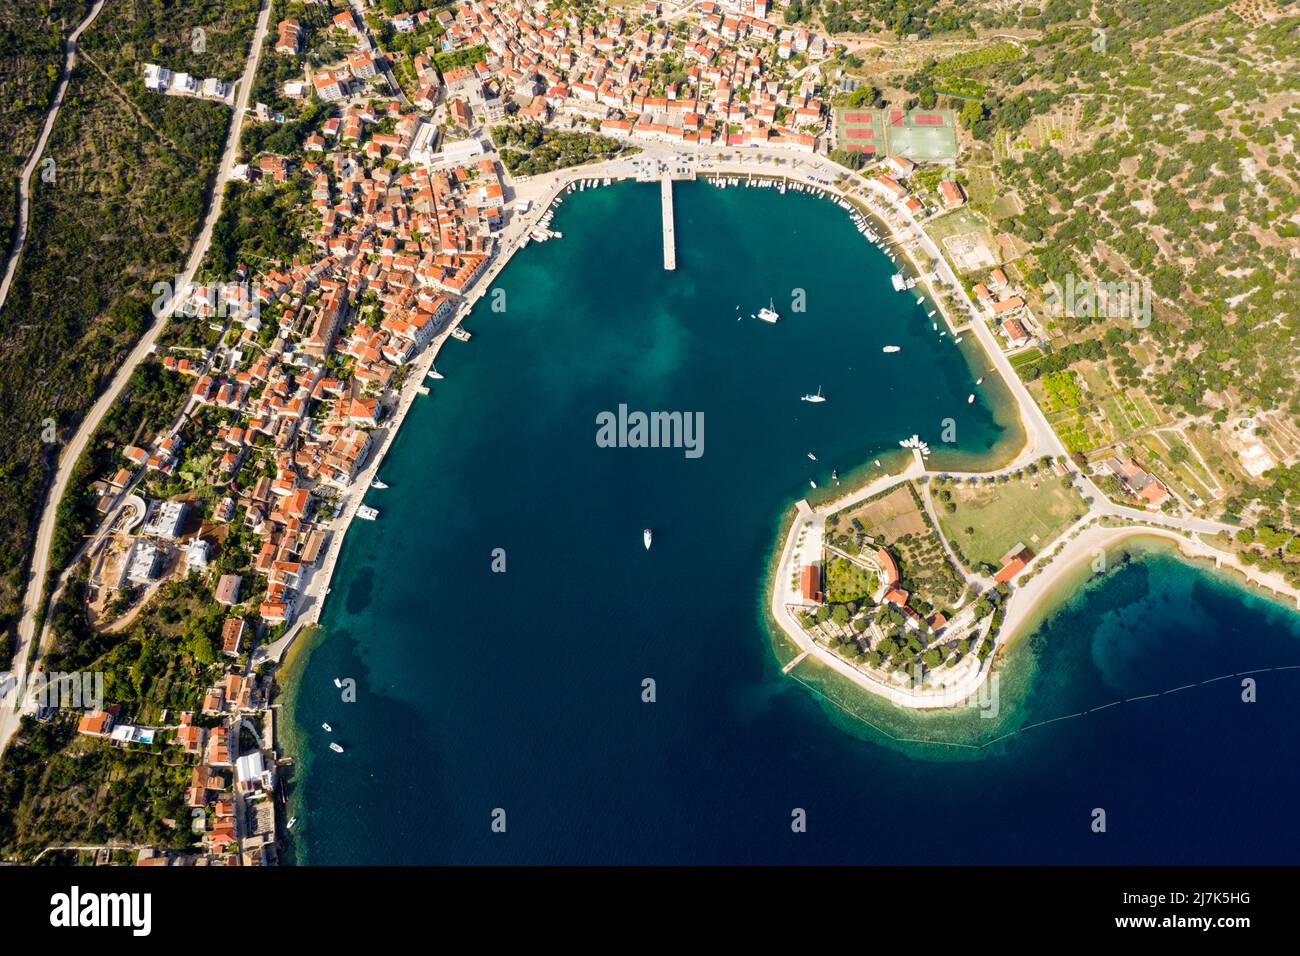 Town and bay of Vis, Vis Island, Mediterranean Sea, Croatia Stock Photo